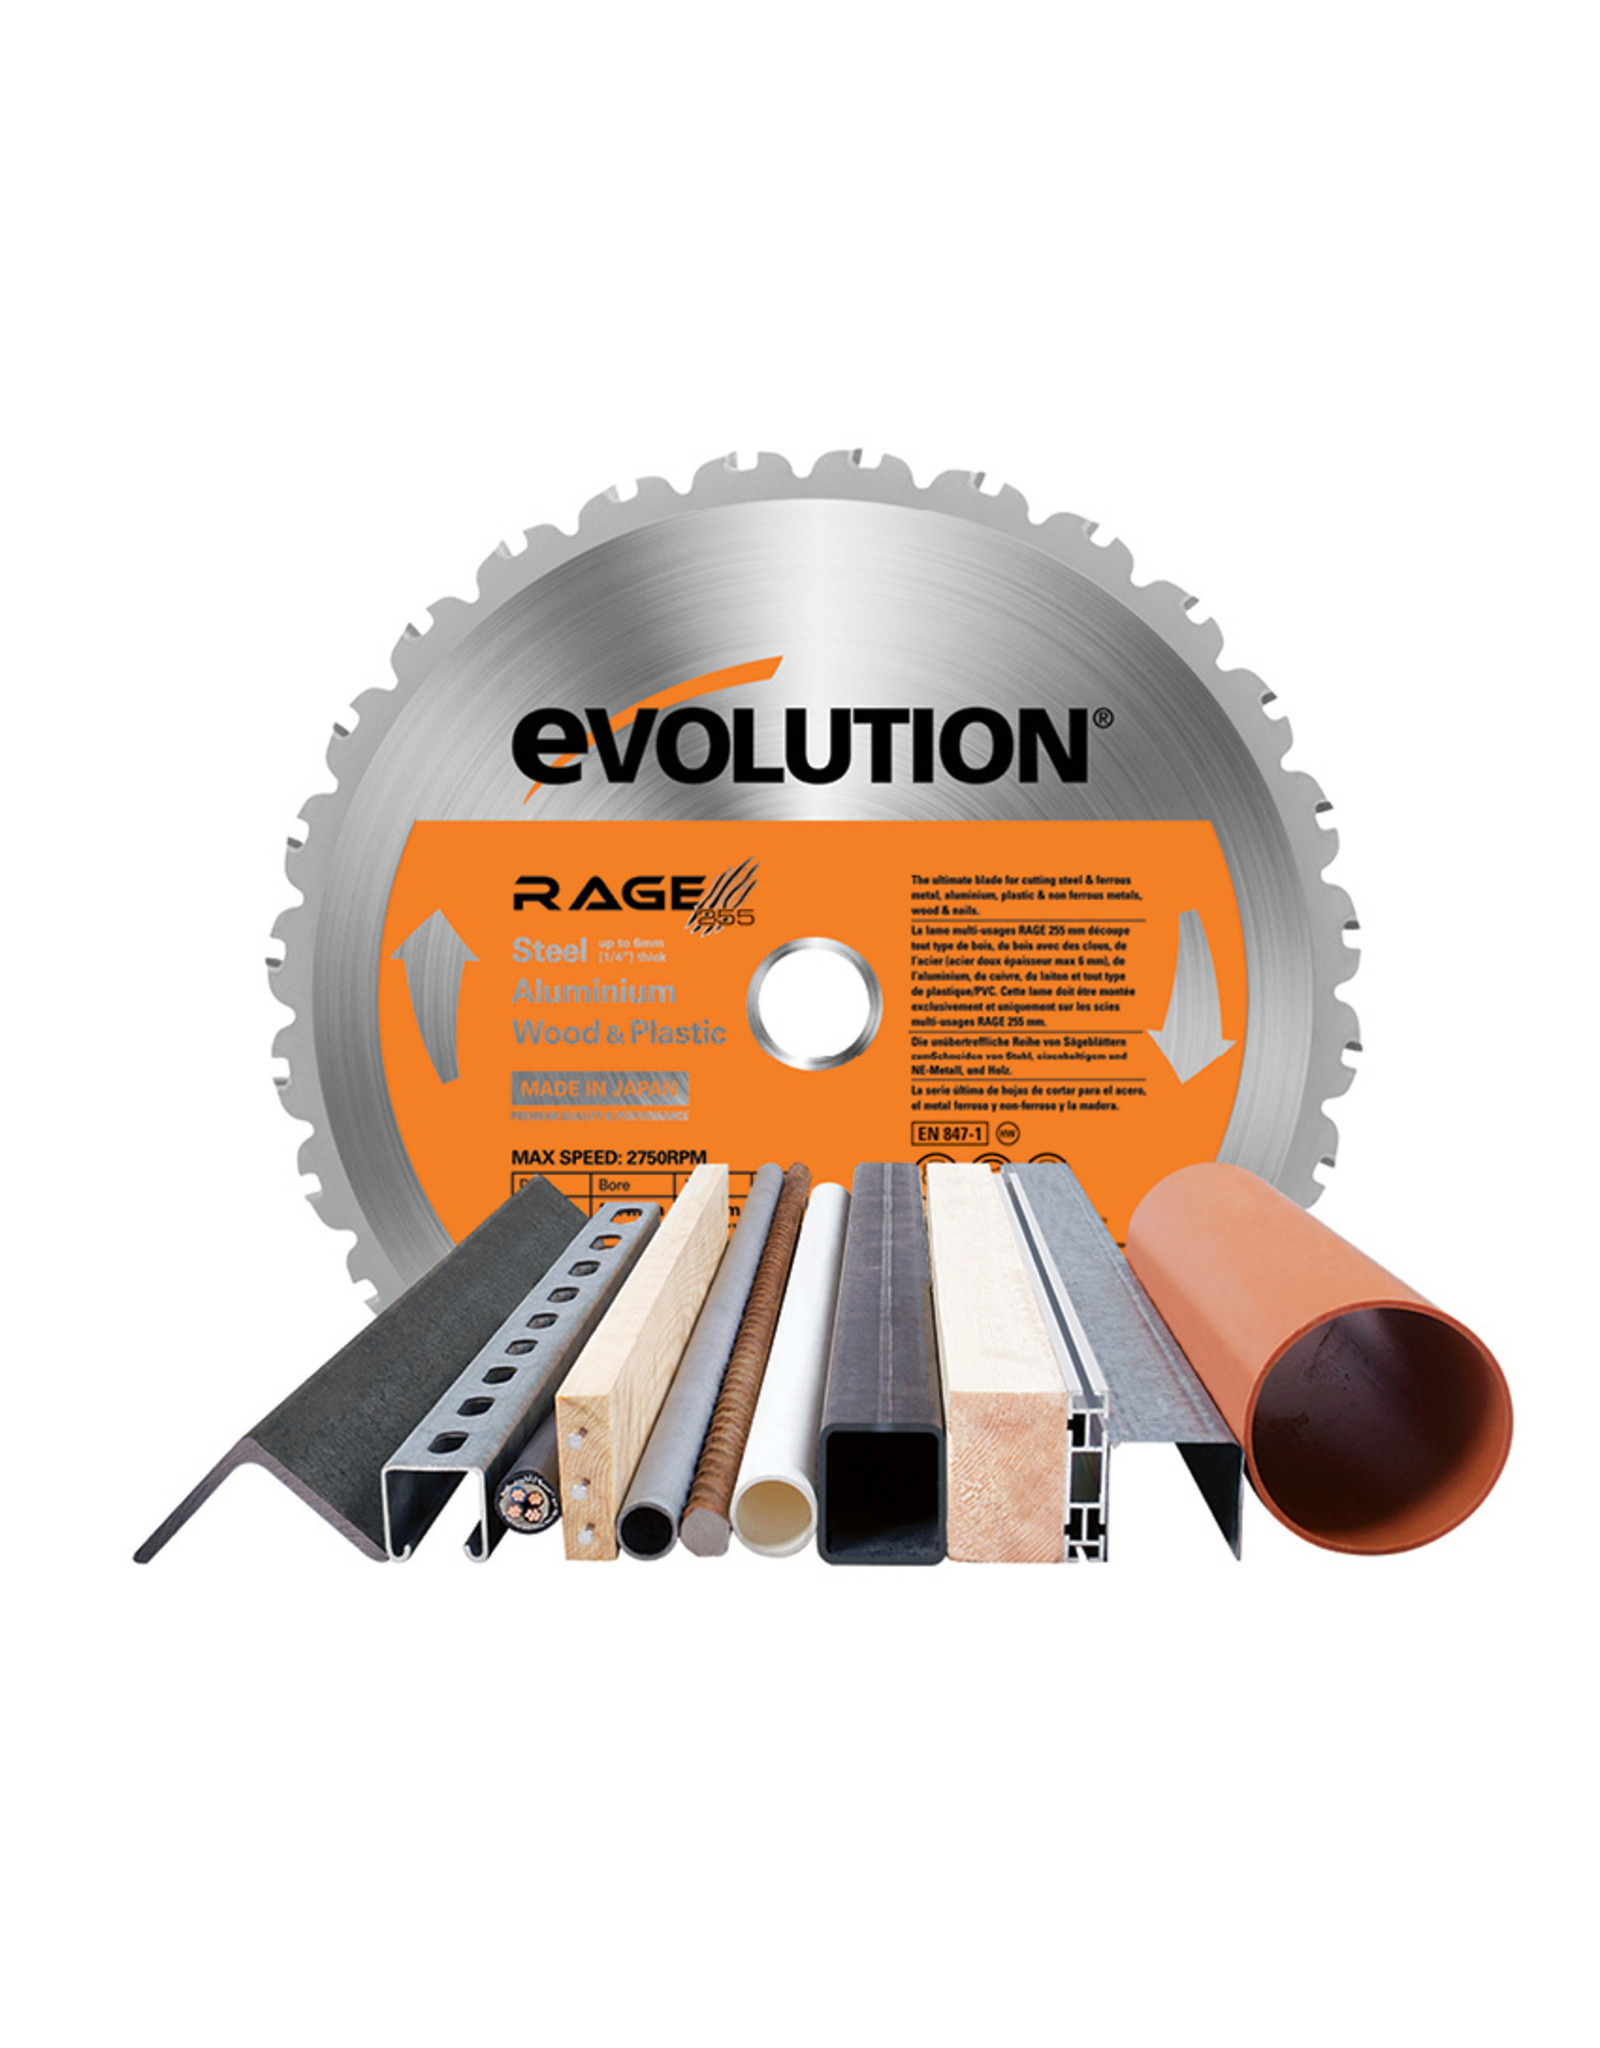 Evolution Power Tools Build Line TABLE SAW RAGE 5-S + 1 SAW BLADE